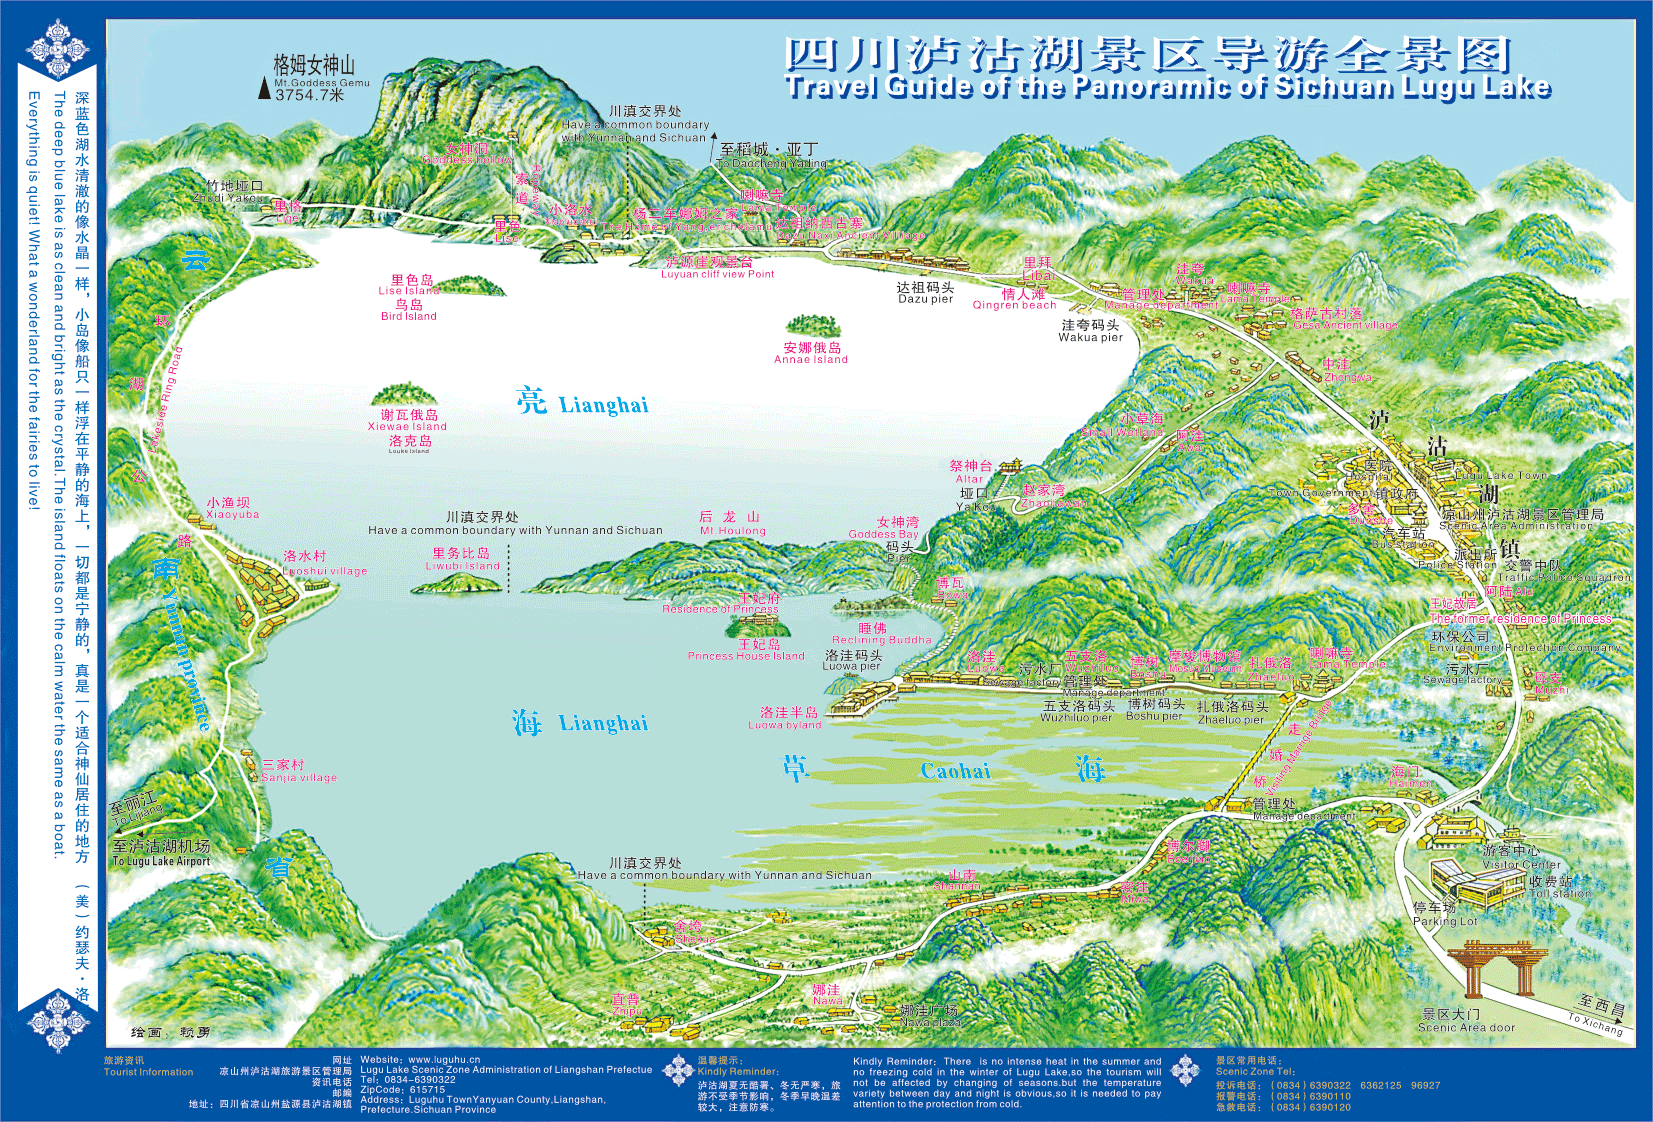  Lugu Lake toruist map